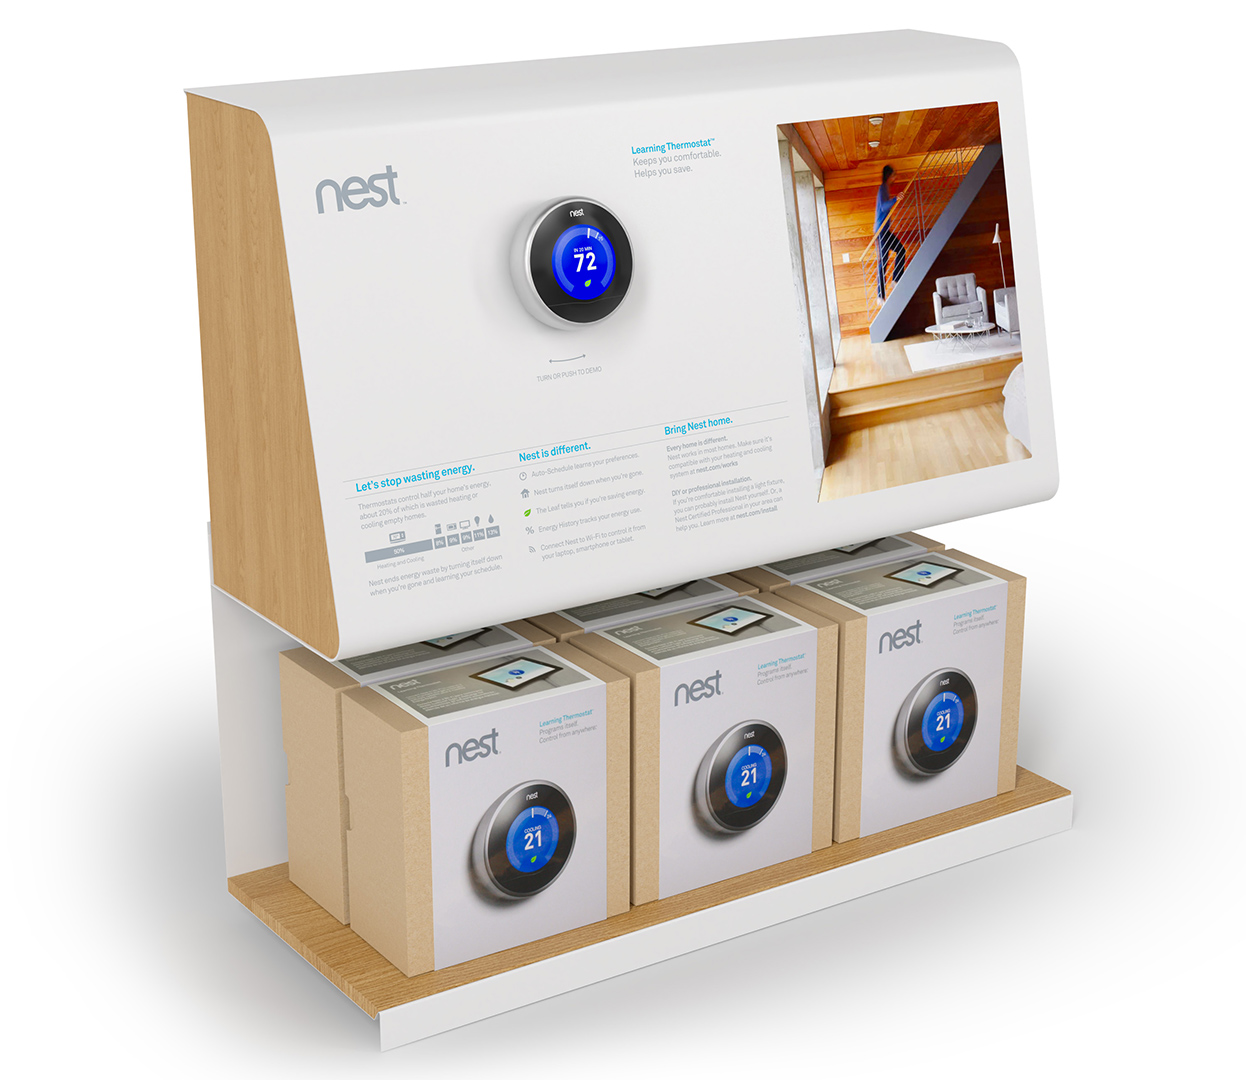 Nest smart thermostat display.